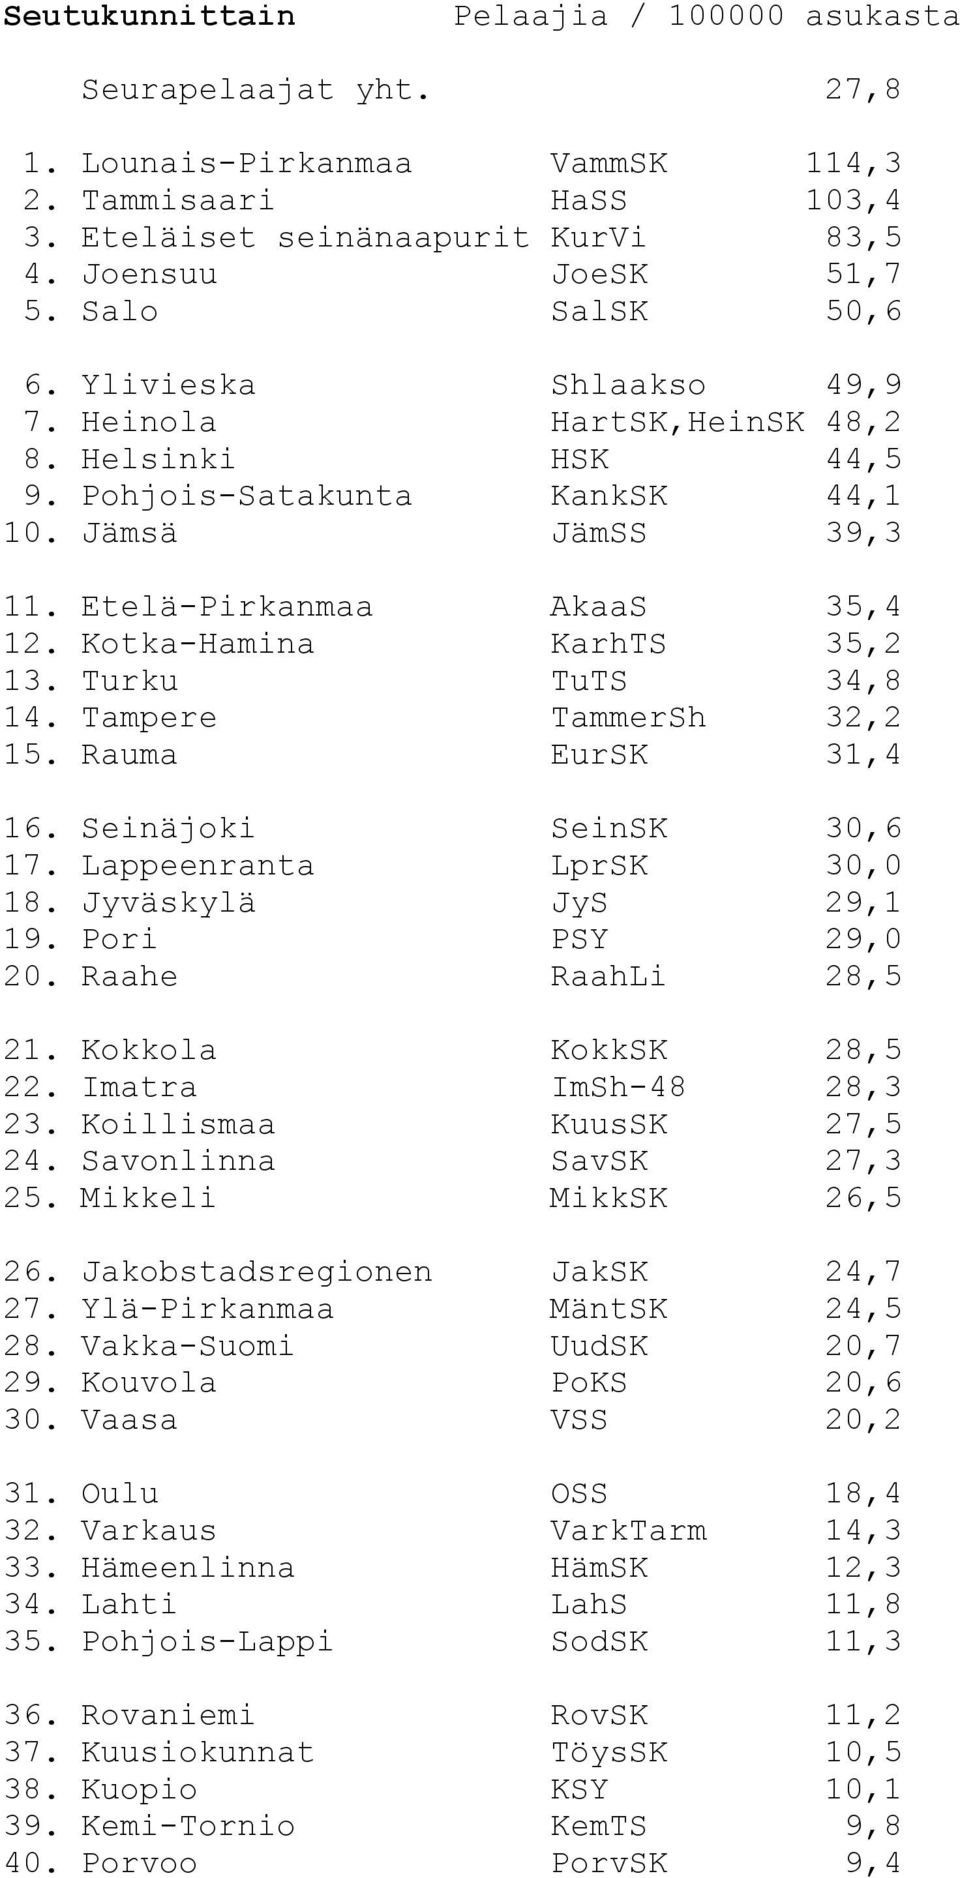 Kotka-Hamina KarhTS 35,2 13. Turku TuTS 34,8 14. Tampere TammerSh 32,2 15. Rauma EurSK 31,4 16. Seinäjoki SeinSK 30,6 17. Lappeenranta LprSK 30,0 18. Jyväskylä JyS 29,1 19. Pori PSY 29,0 20.